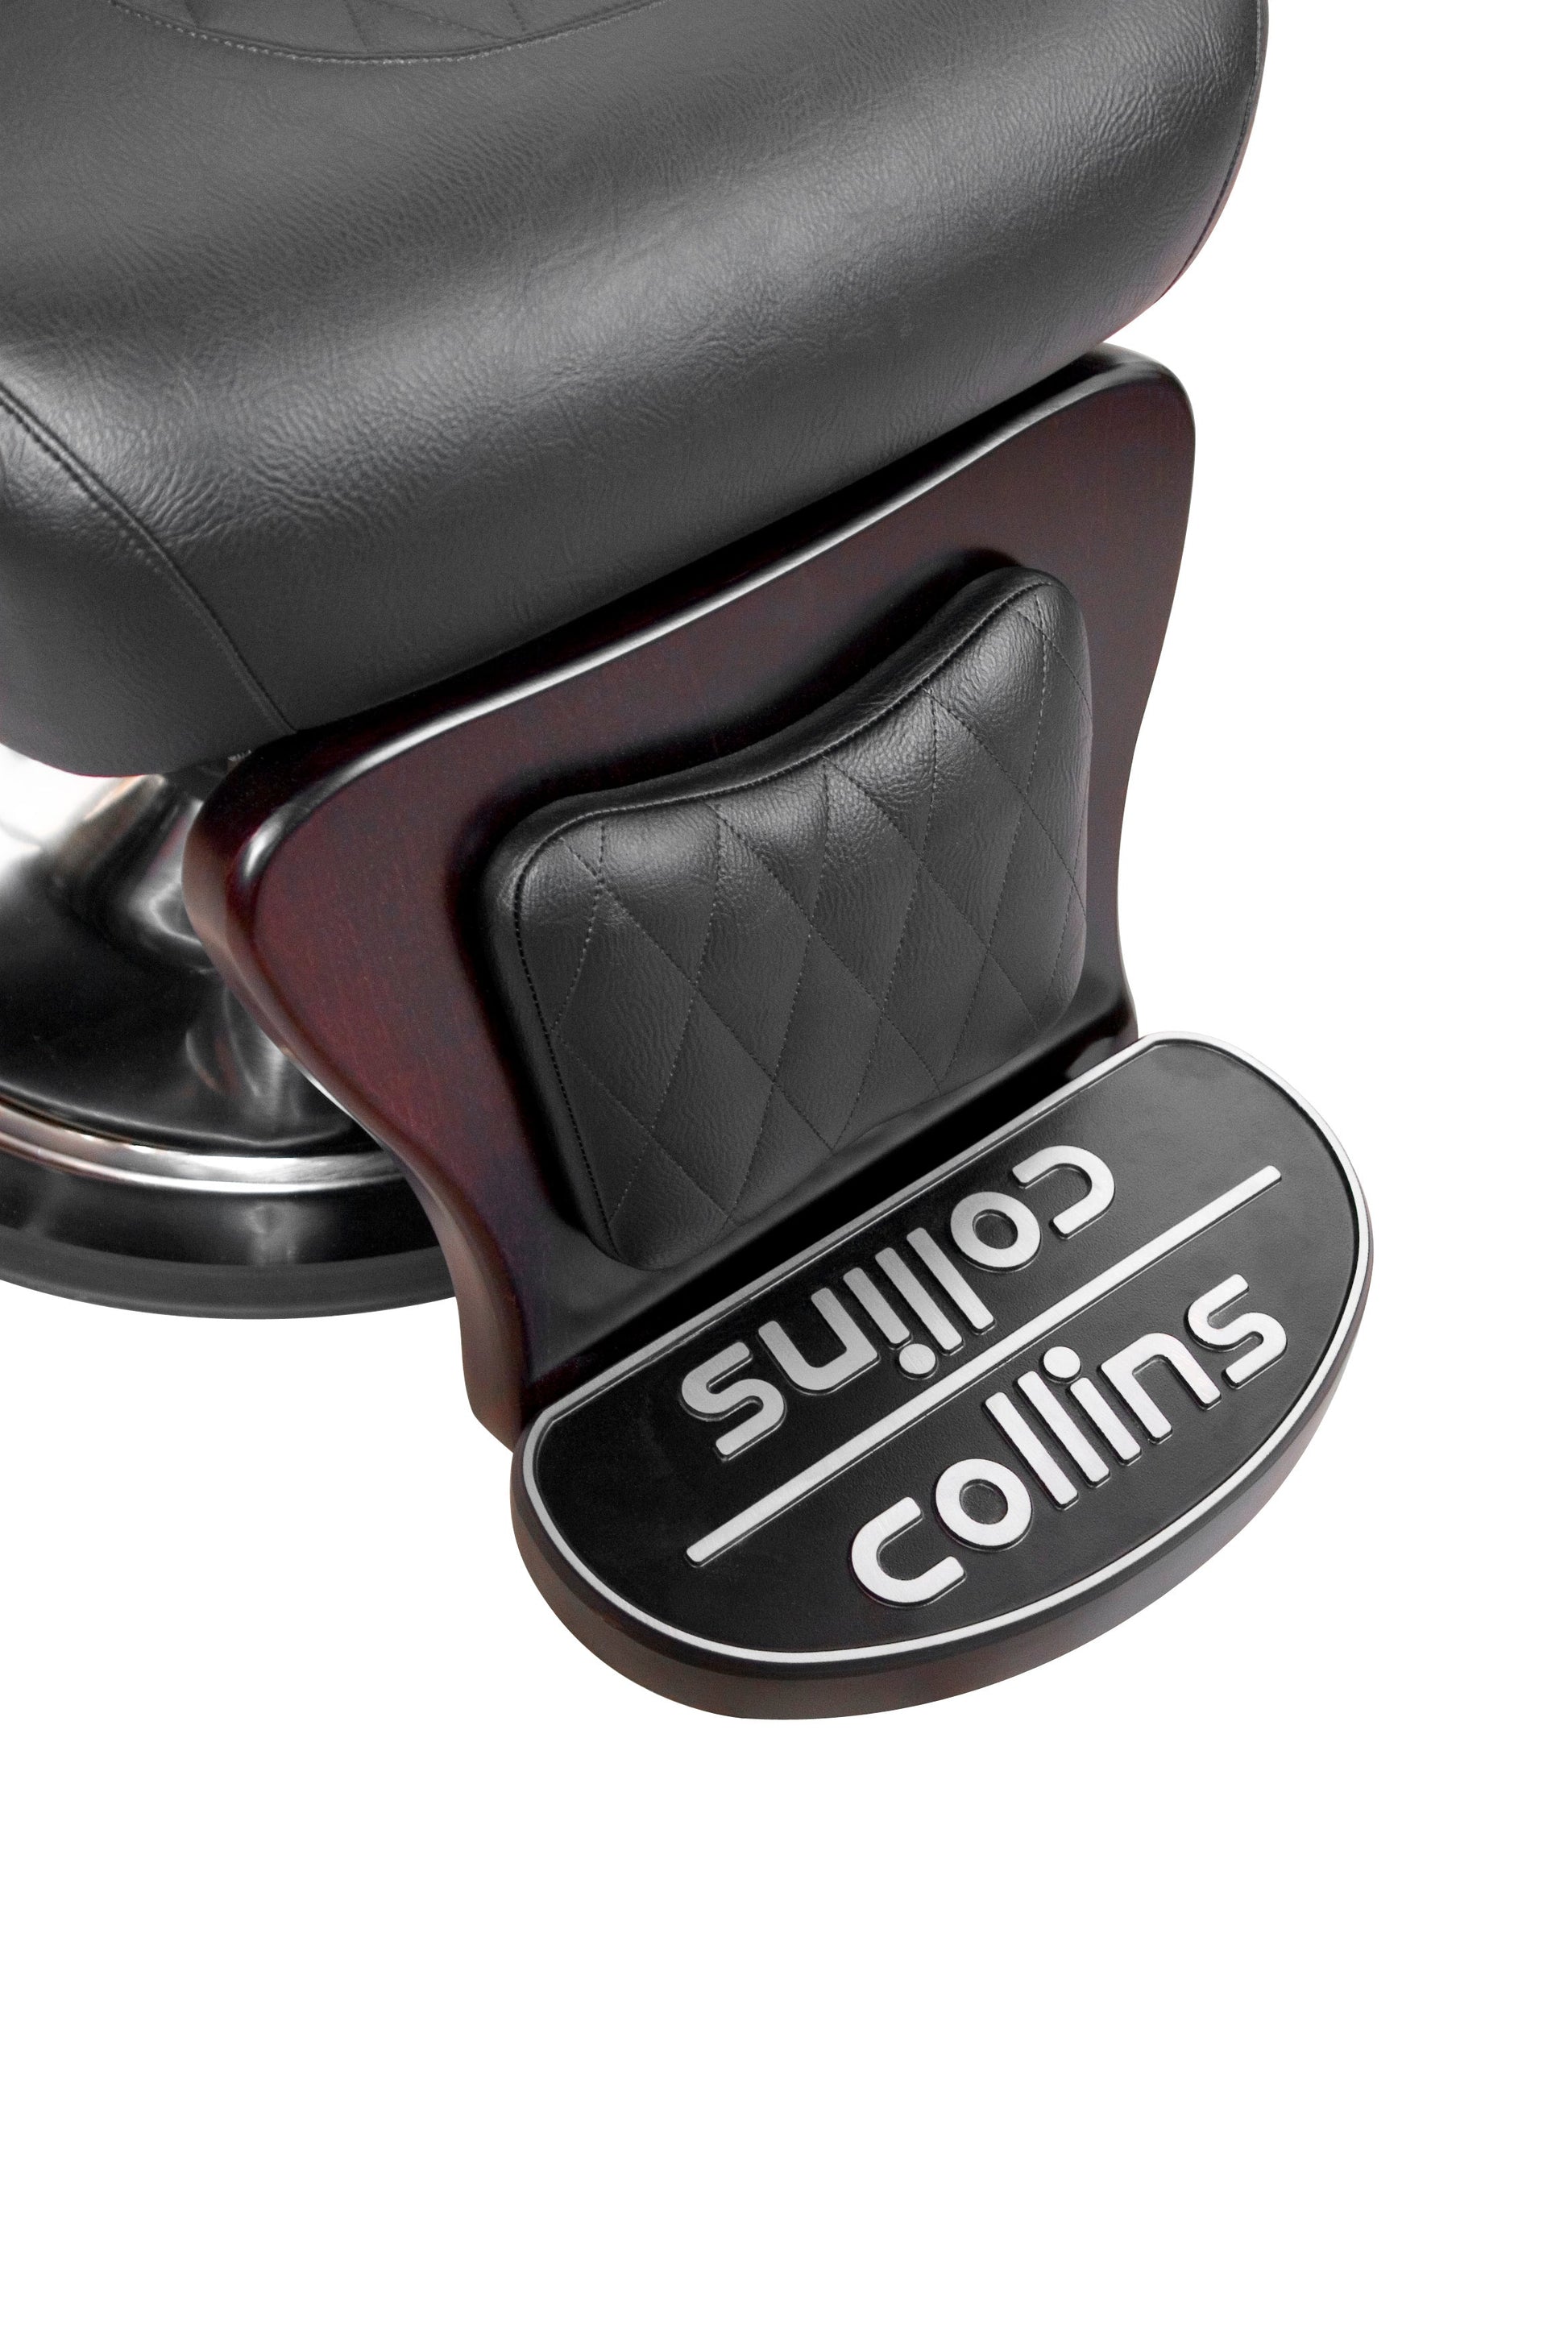 Commander Premium Barber Chair - Collins